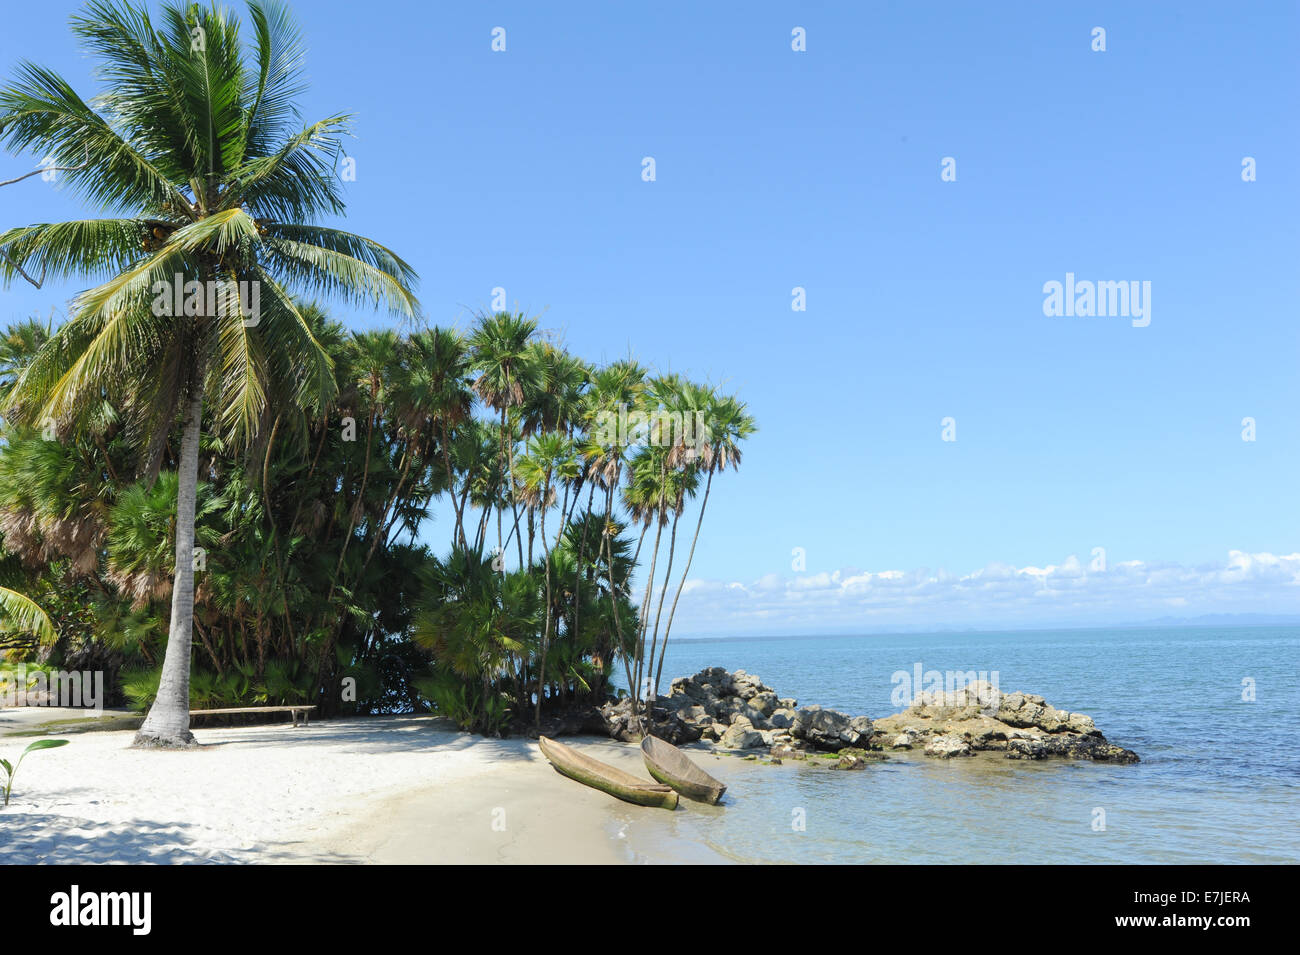 Guatemala, Central America, beach, boat, Livingston, nature, ocean, palm trees, playa blanca, sand, scenic, trees Stock Photo